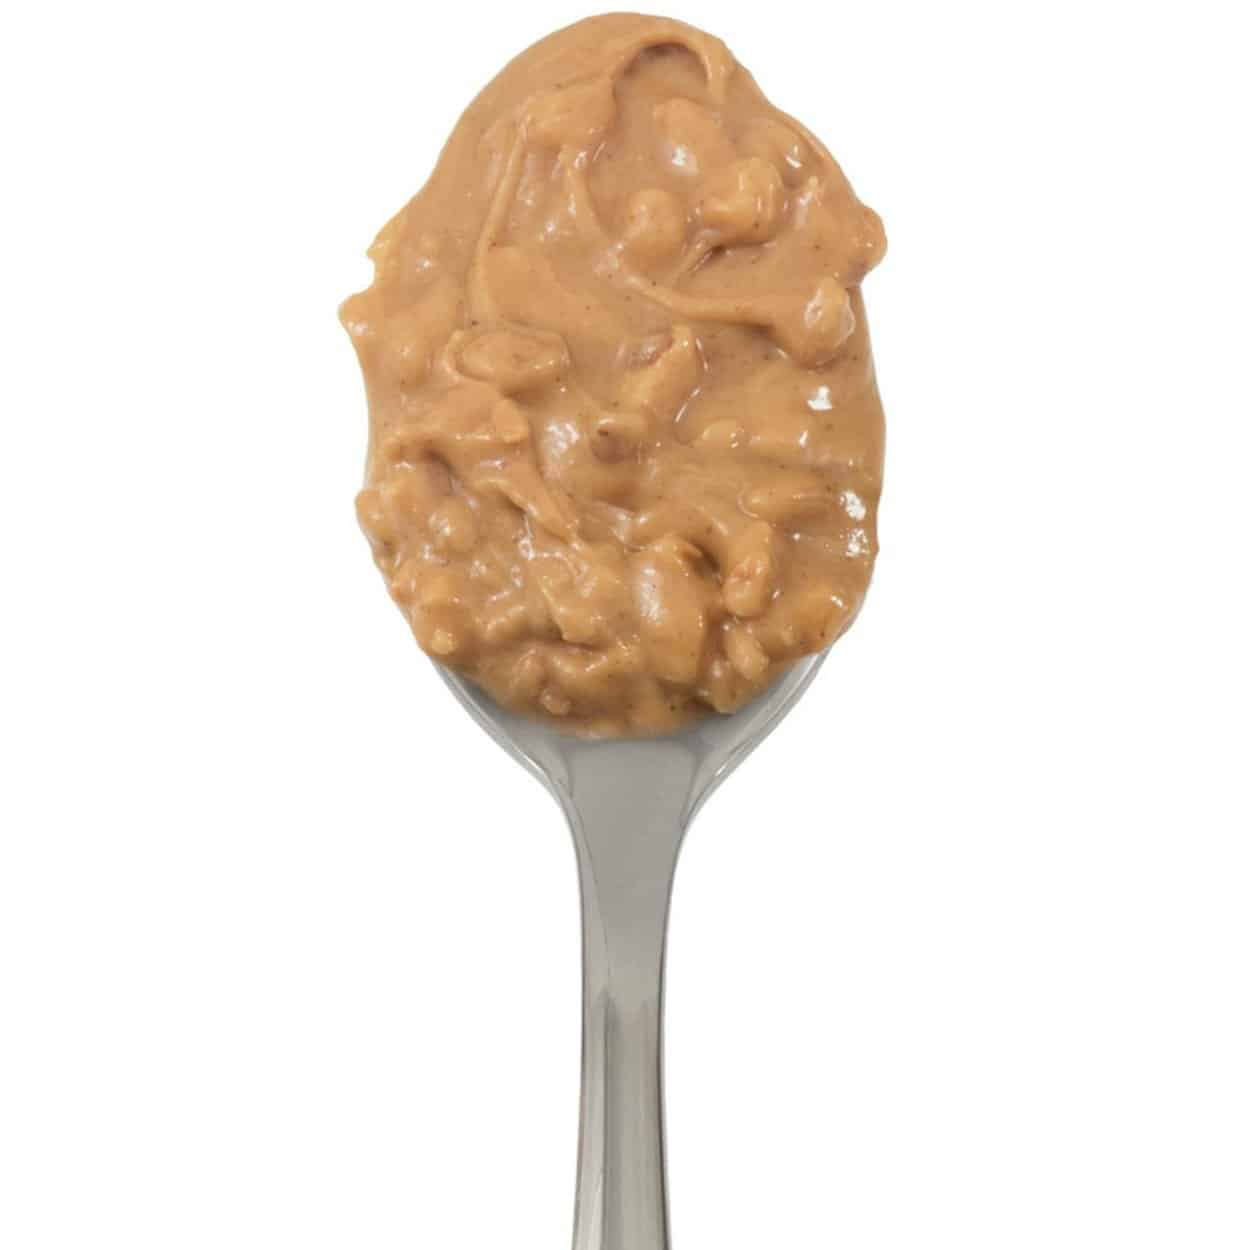 Crunchy Peanut butter on a spoon